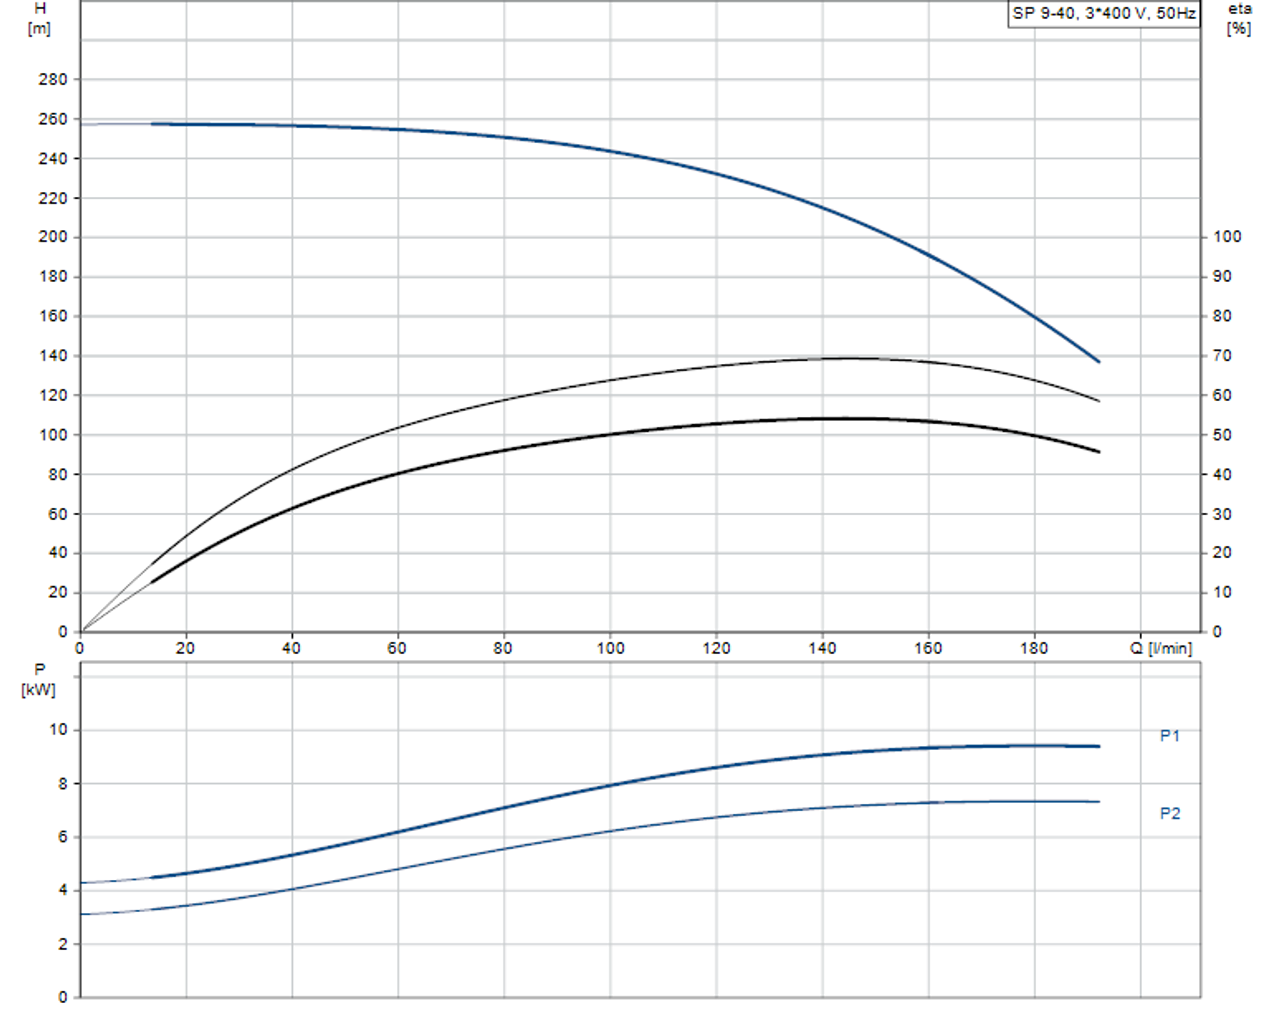 SP 9-40 415v Performance Curve